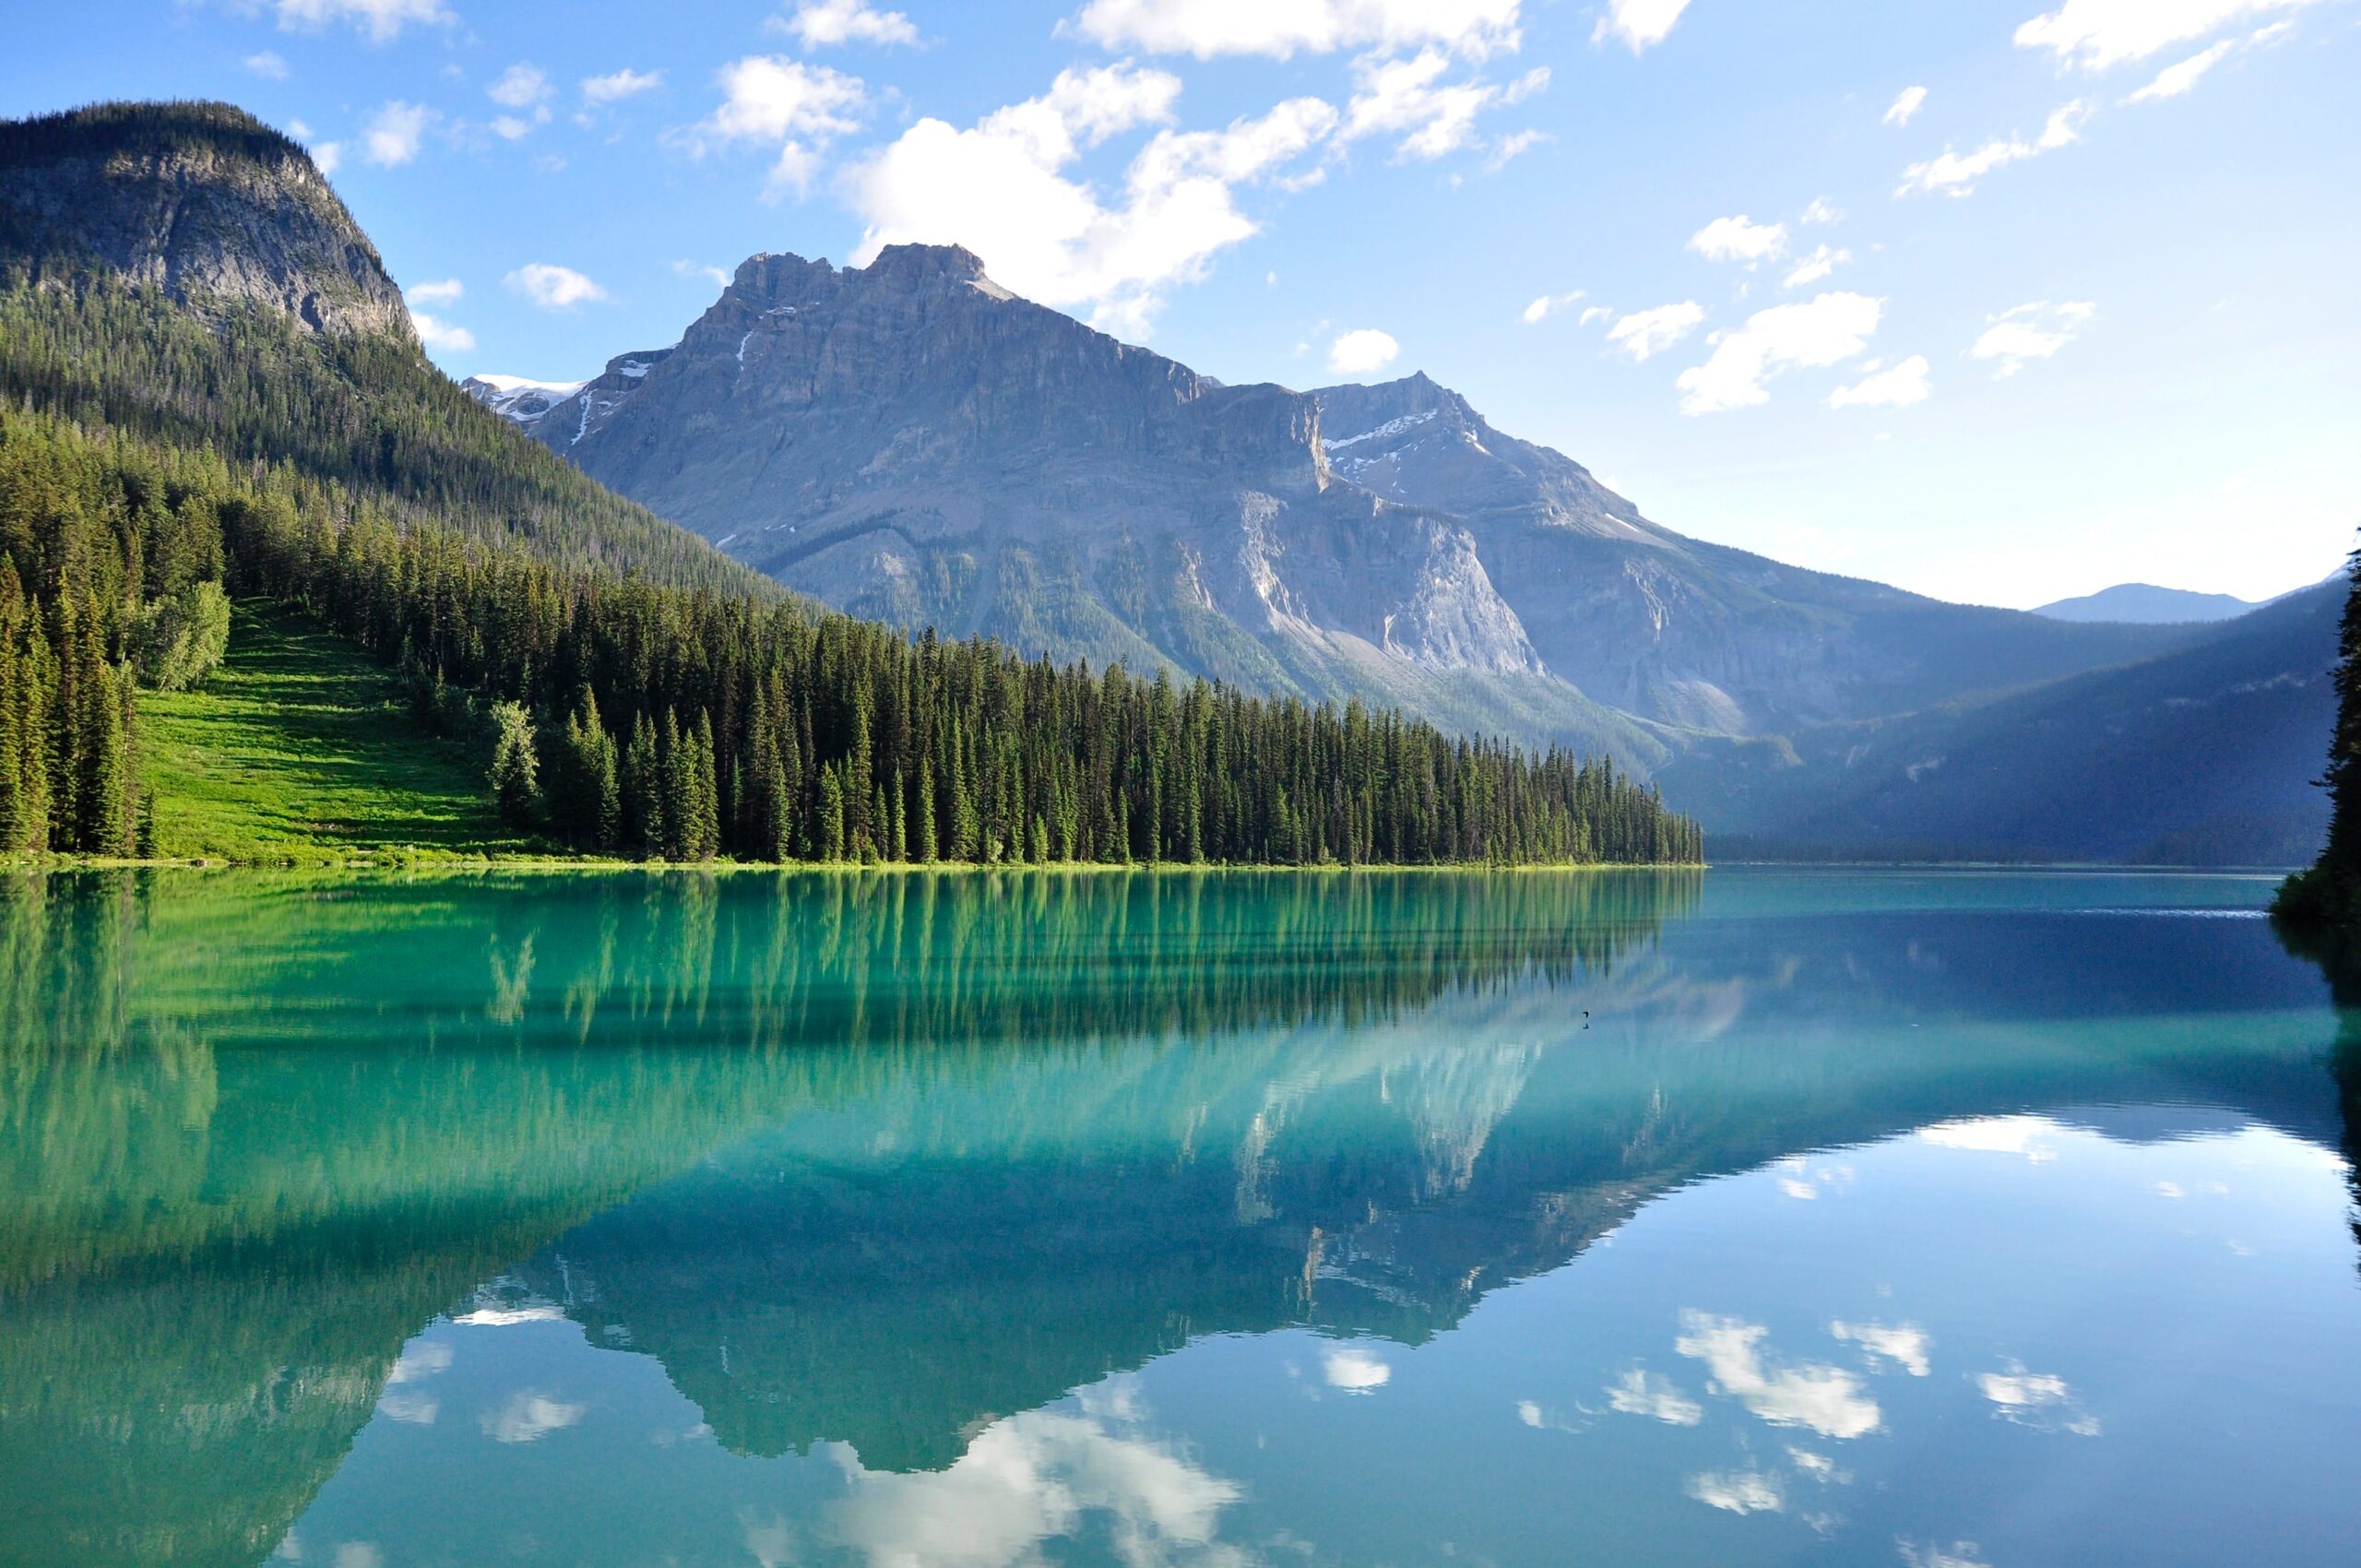 Emerald lake - Yoho National Park, Canada